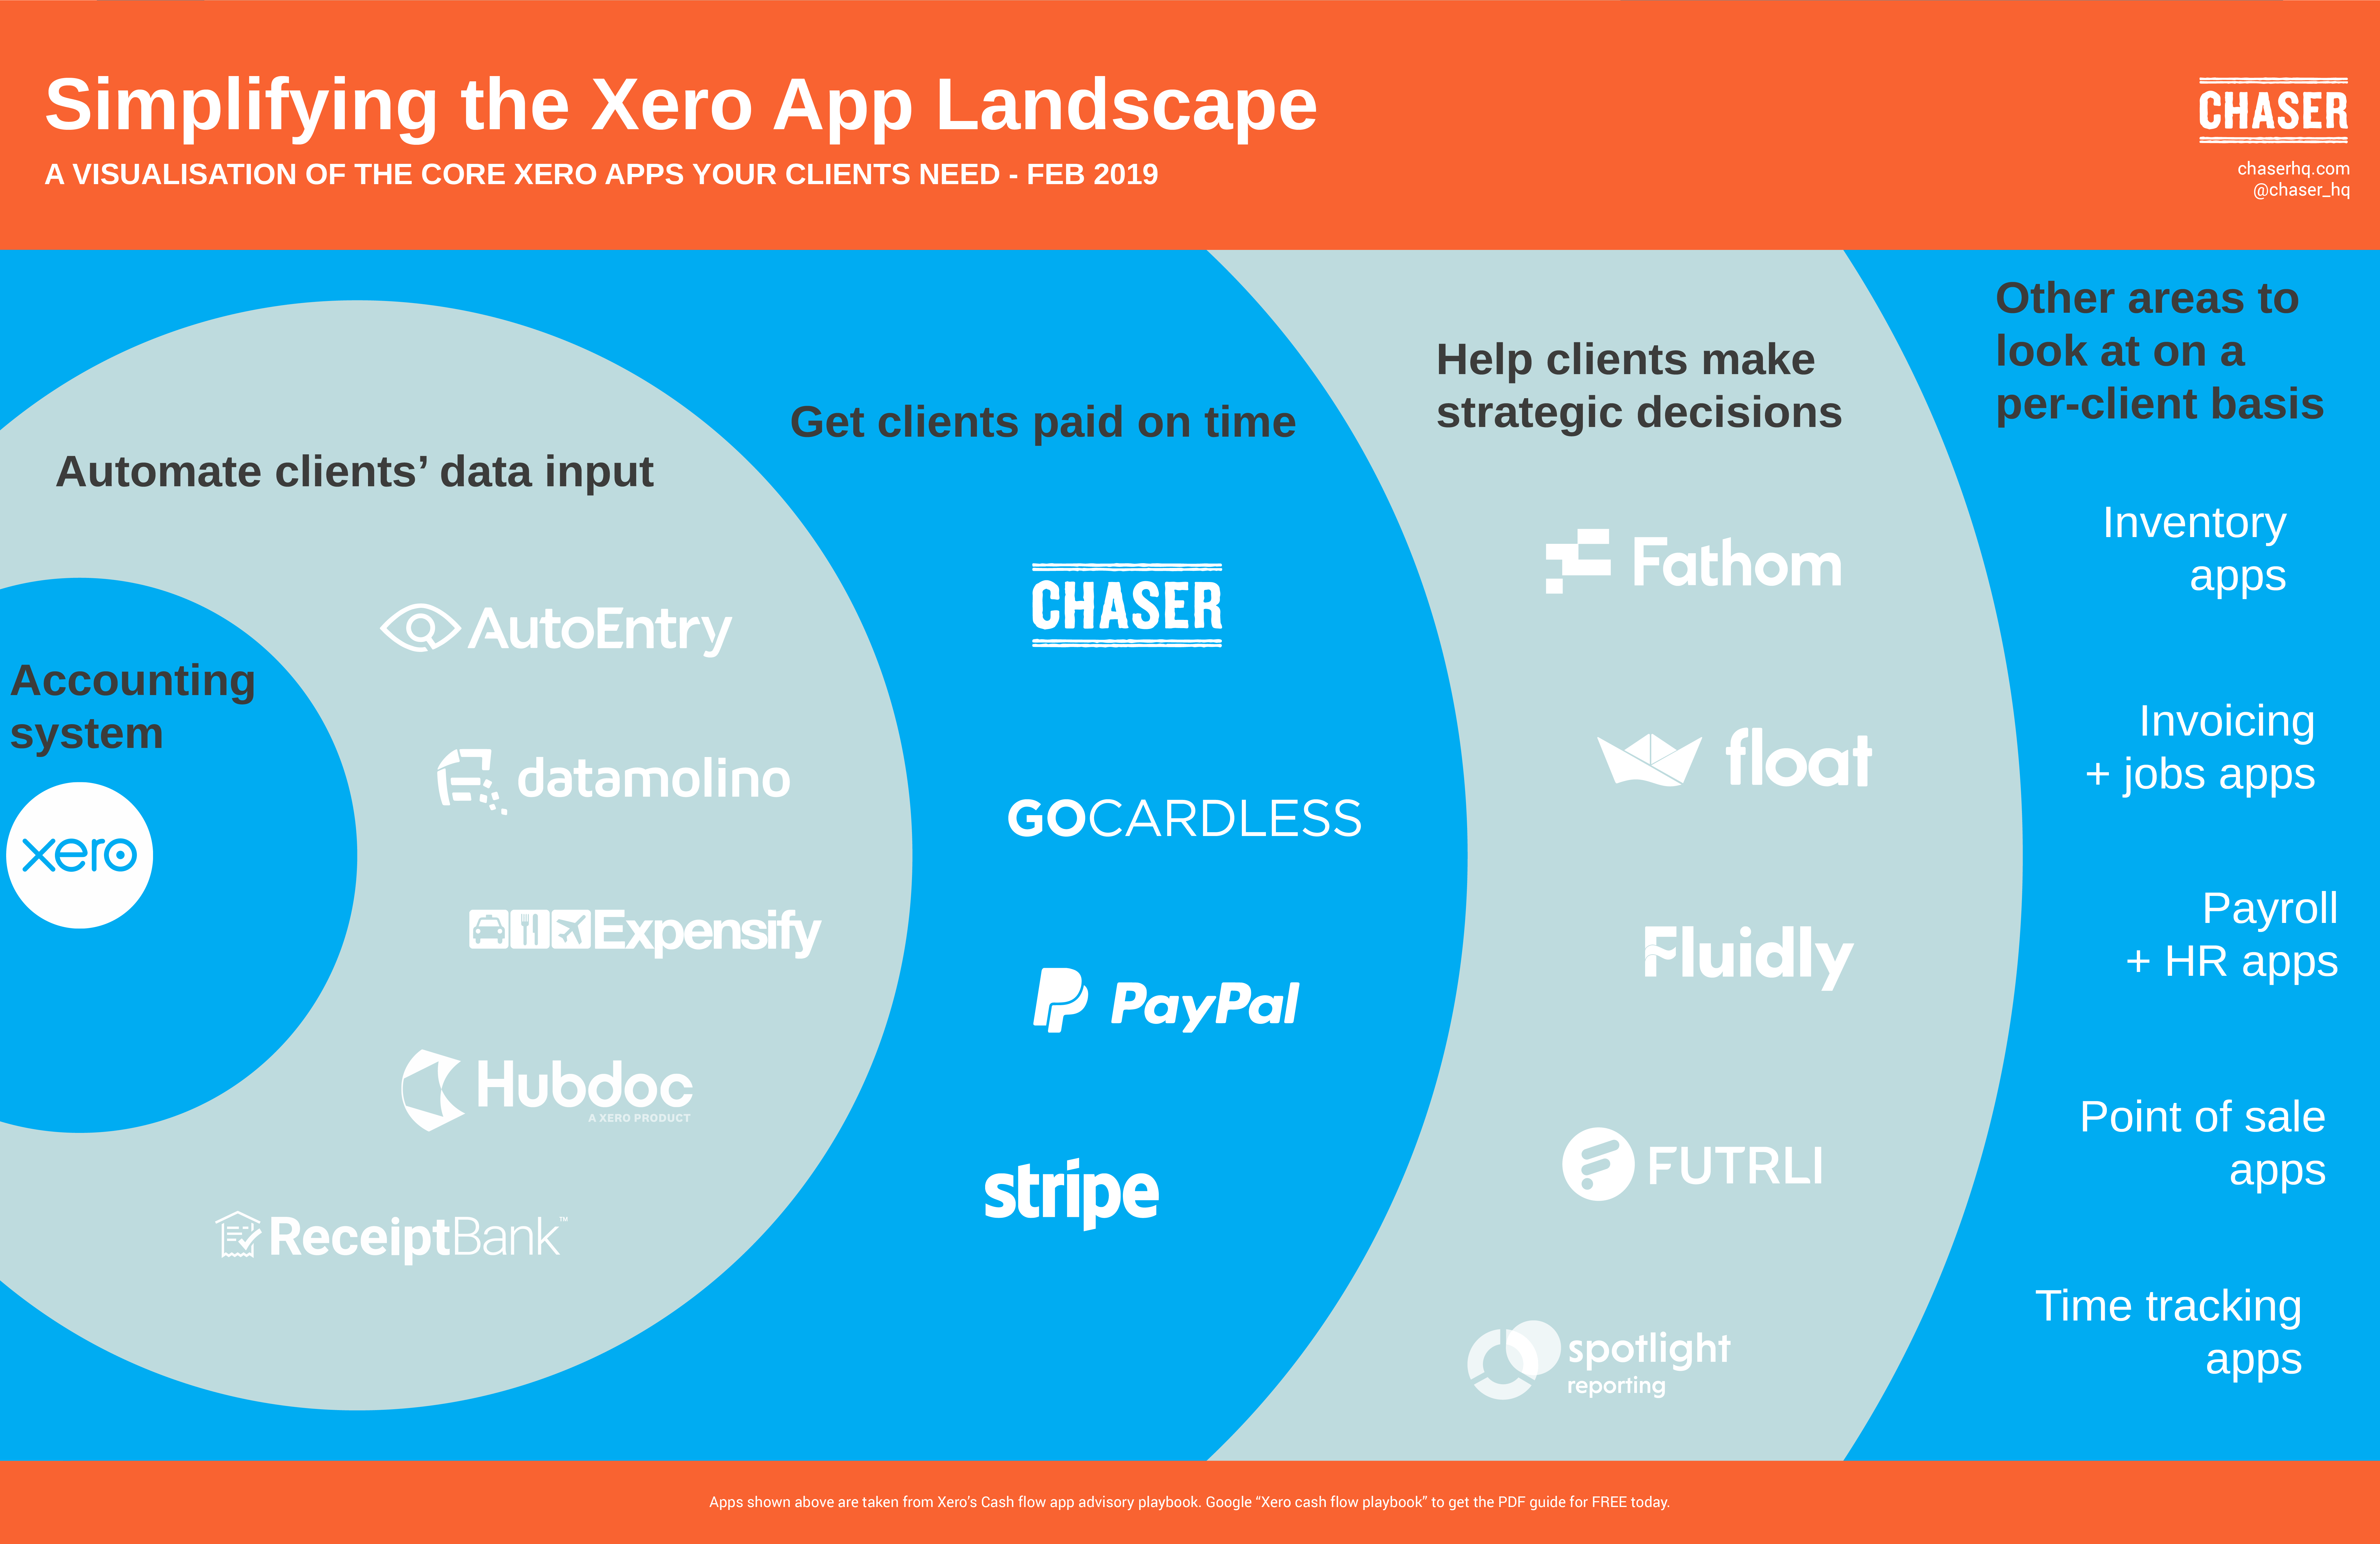 Visualisation of the three core areas of Xero's app marketplace